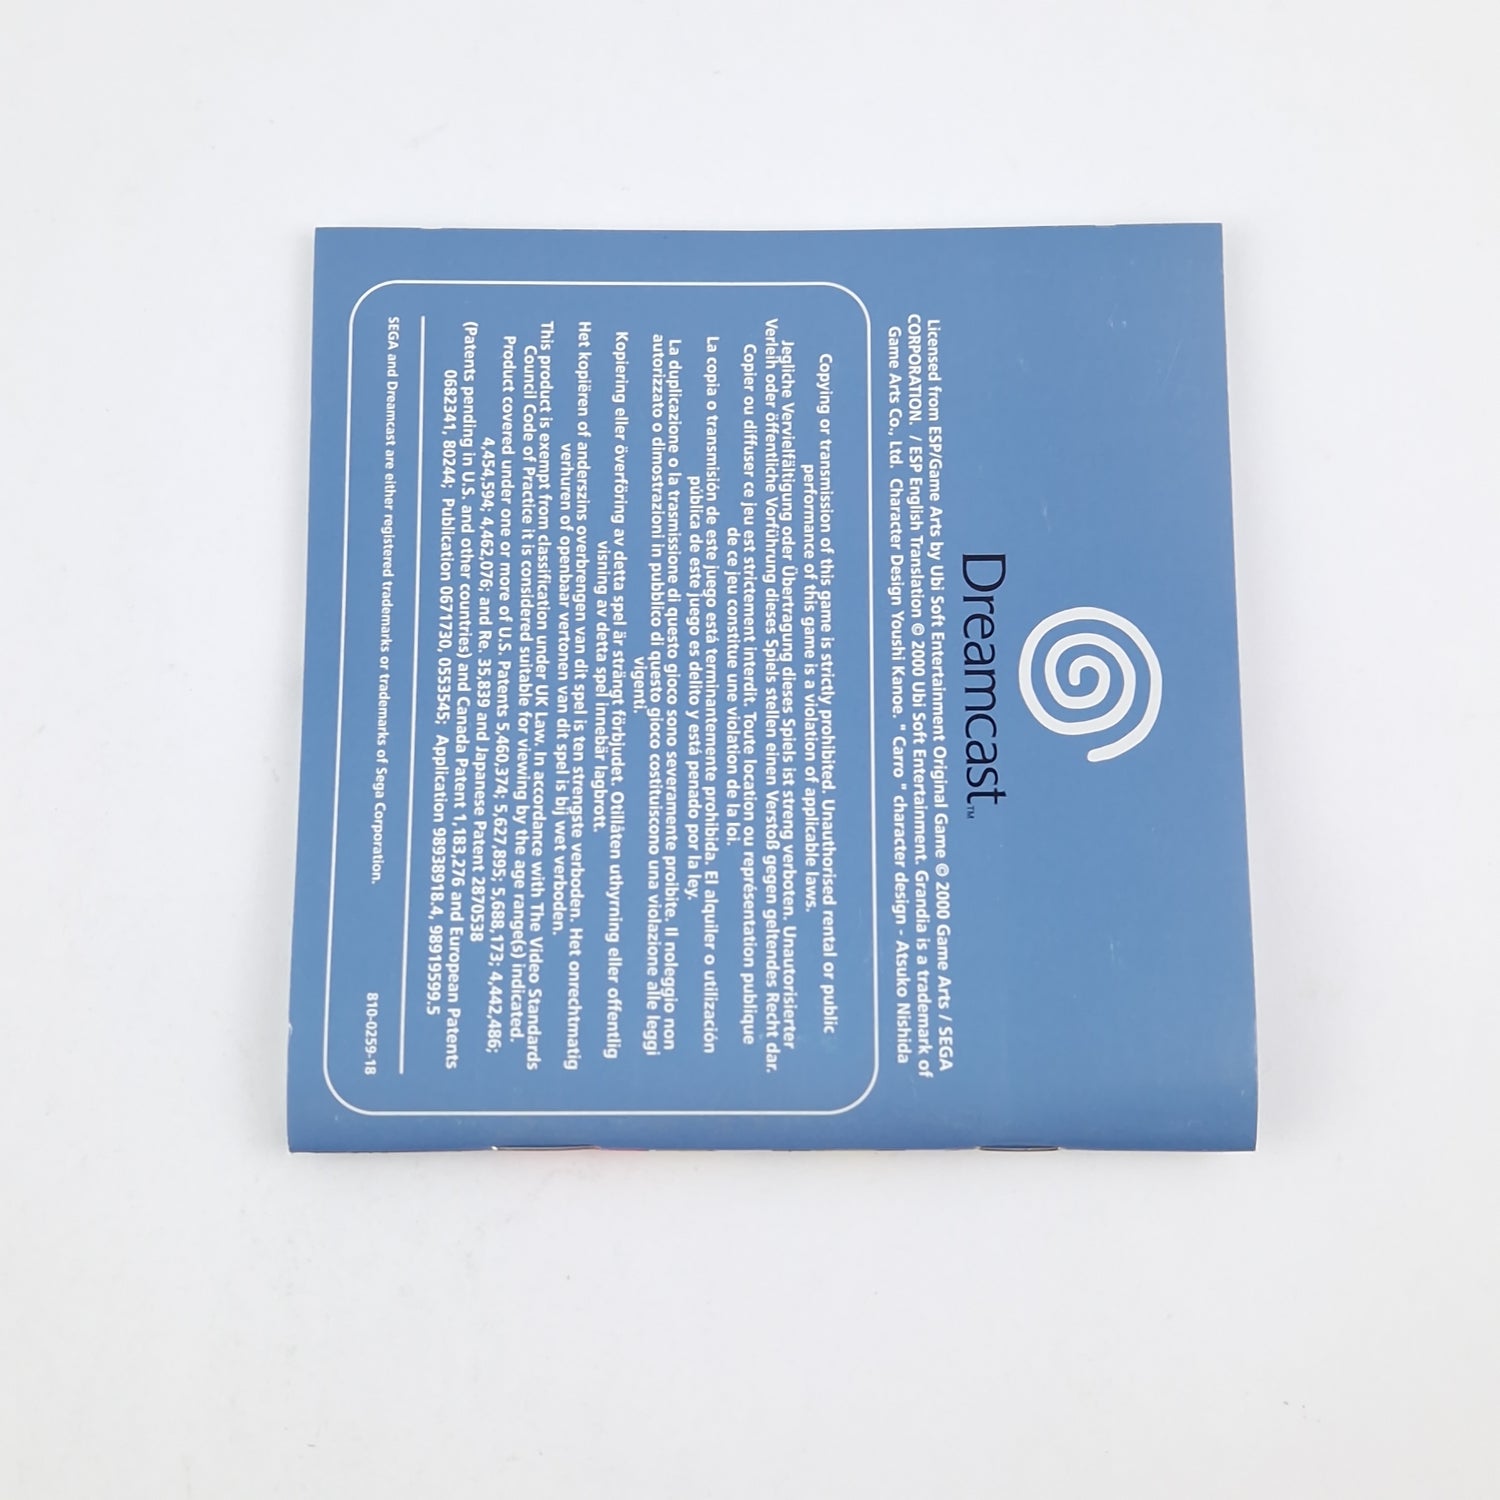 Sega Dreamcast Spiel : Grandia II - CD Disk Anleitung OVP / DC